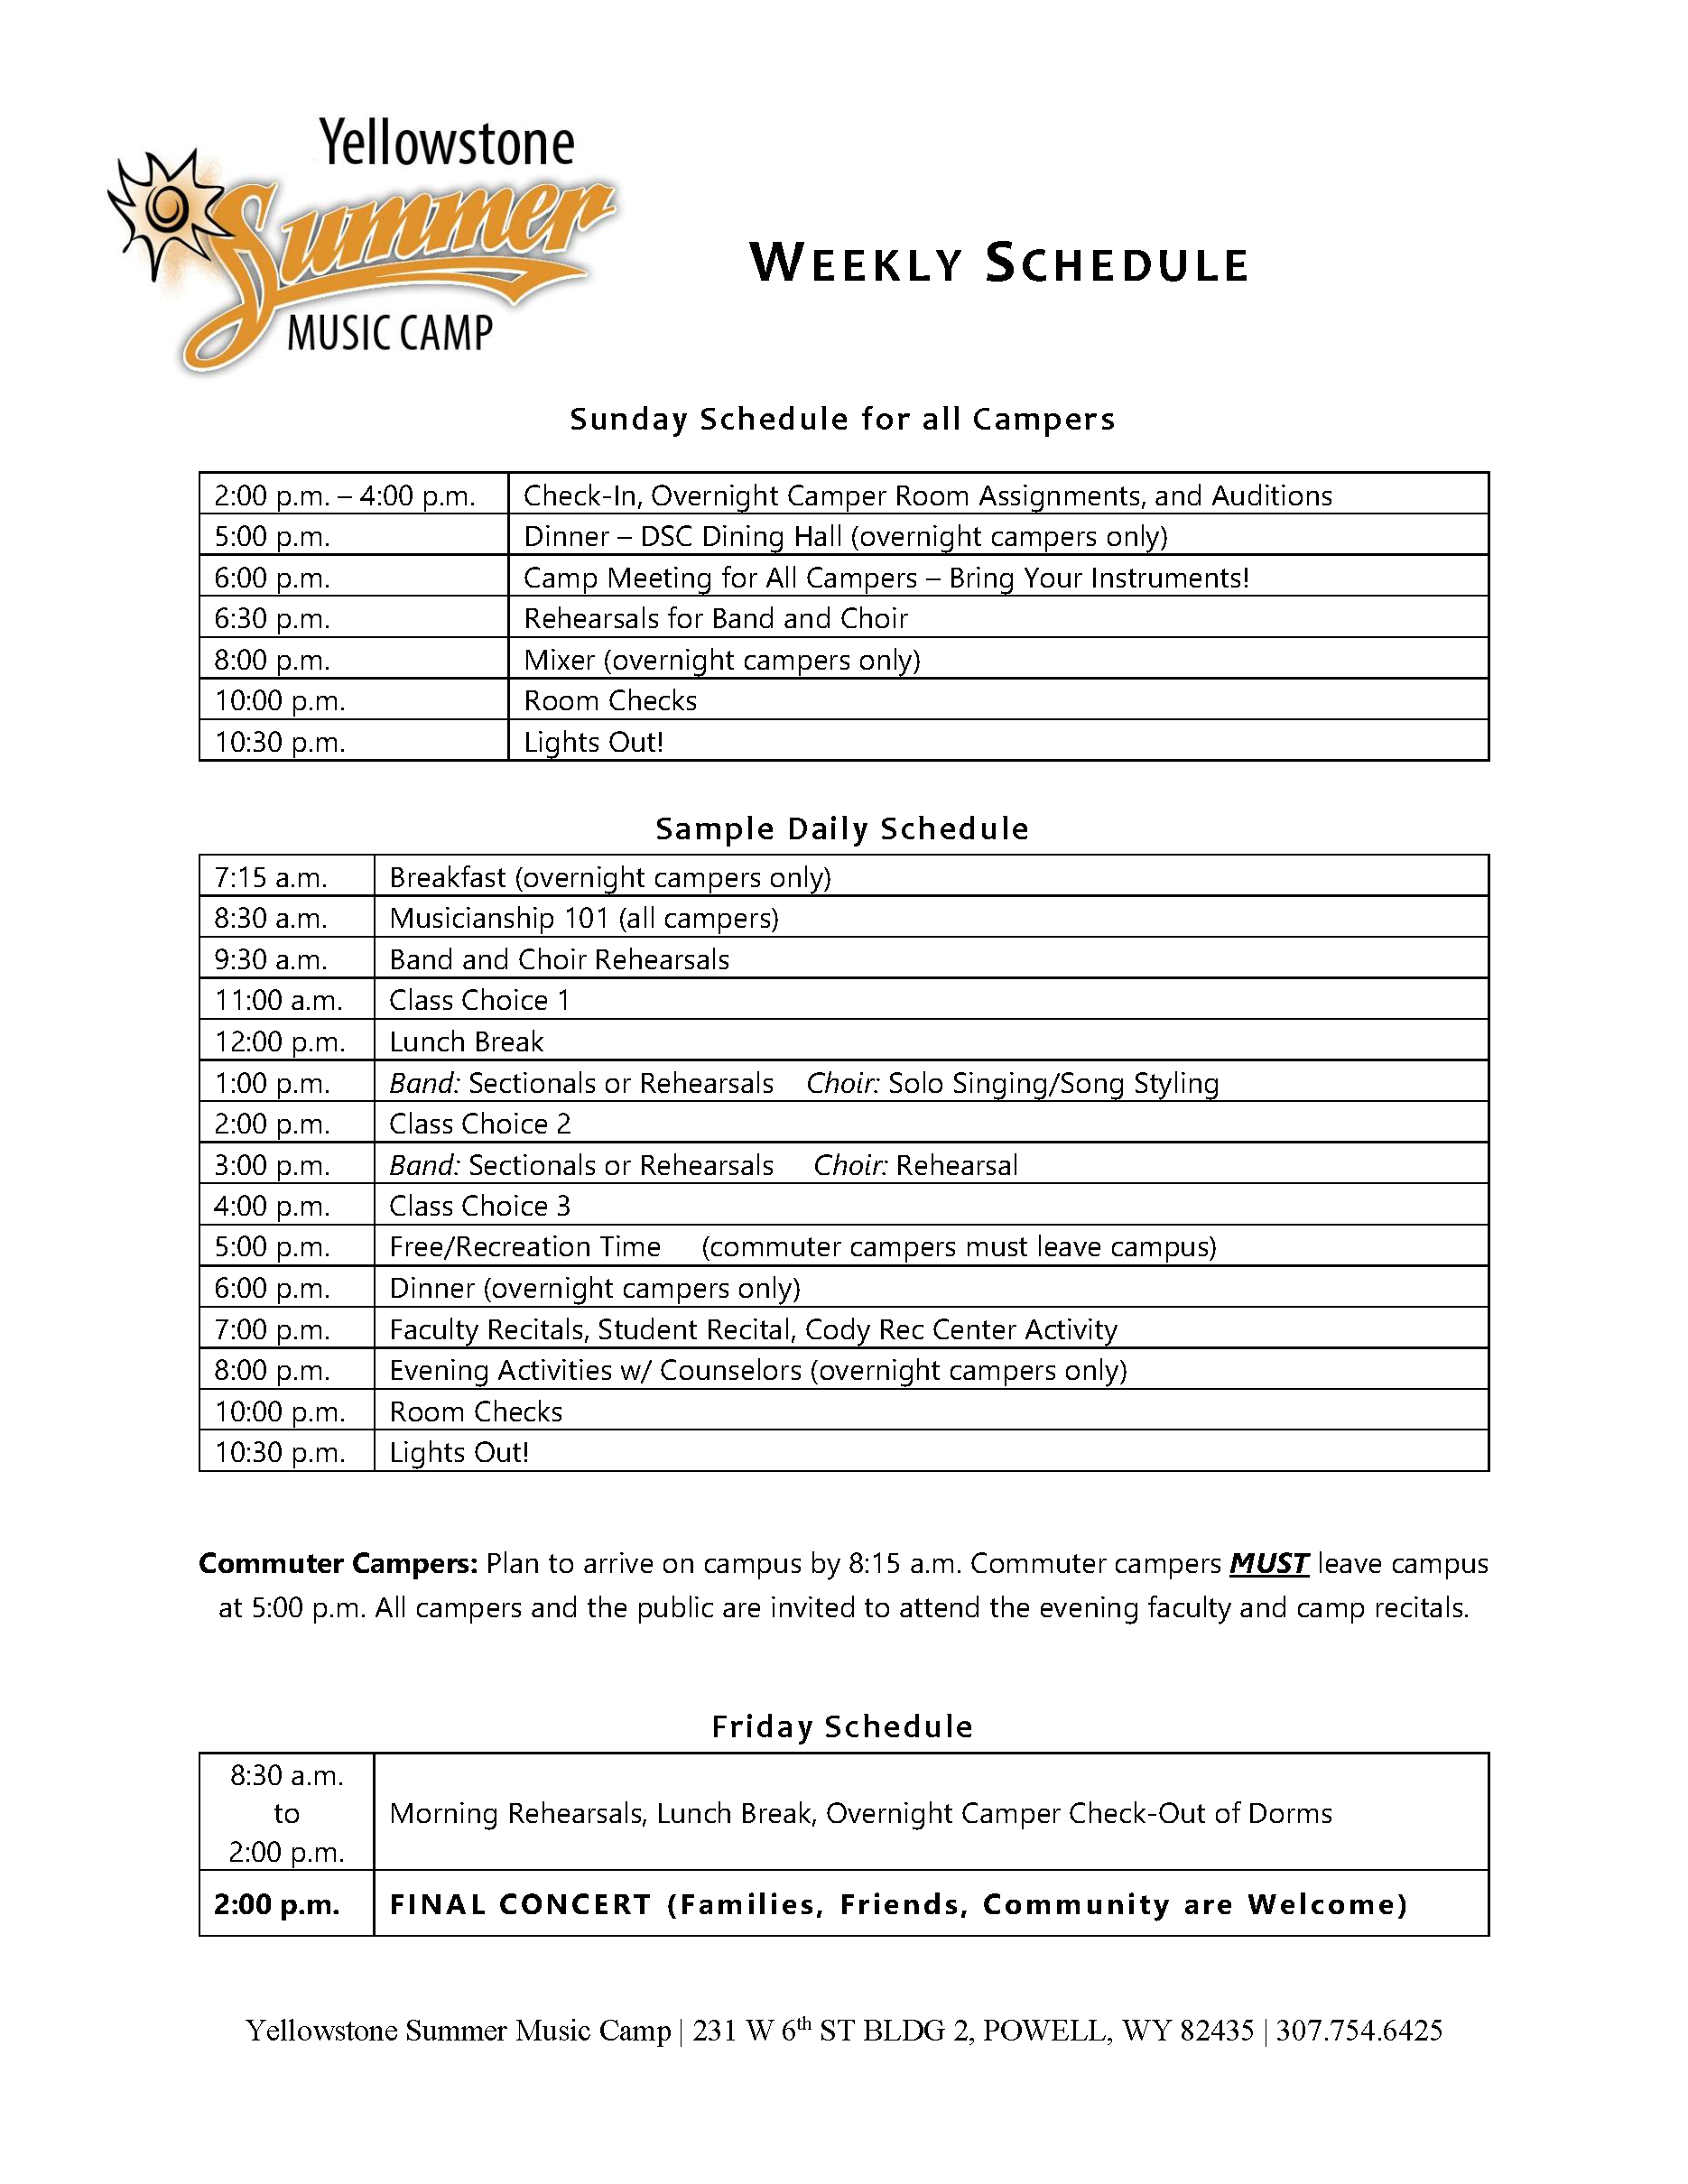 YSMC Sample Daily Schedule_2018